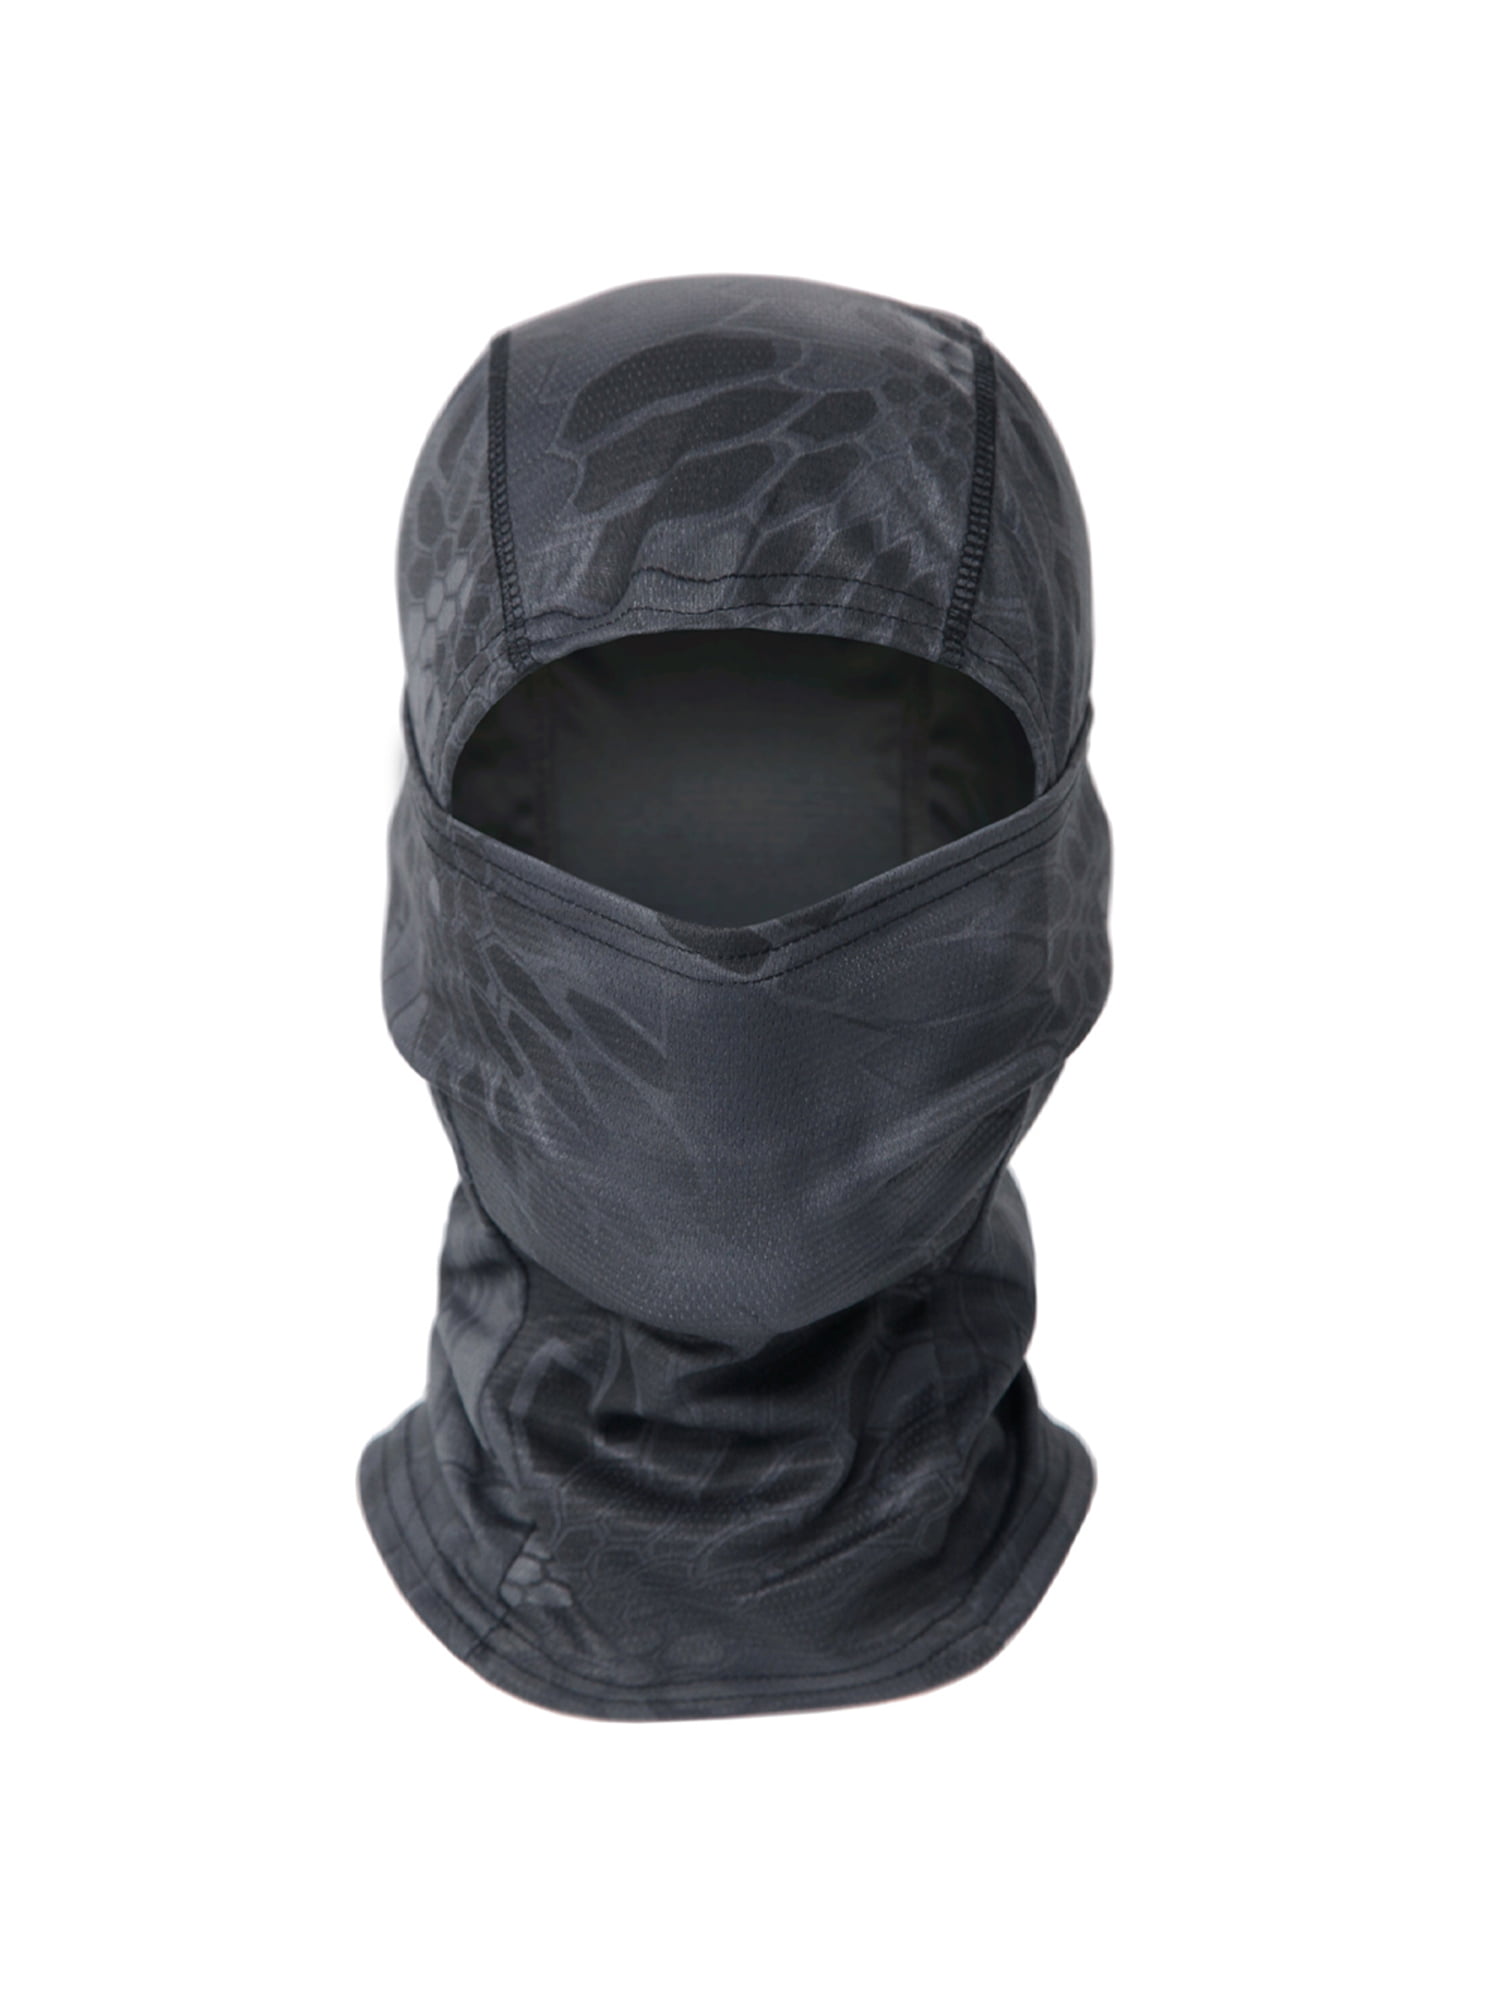 Women Men Hiking Hunting Headgear Hat Balaclava Face Mask Camouflage Fleece Hood 